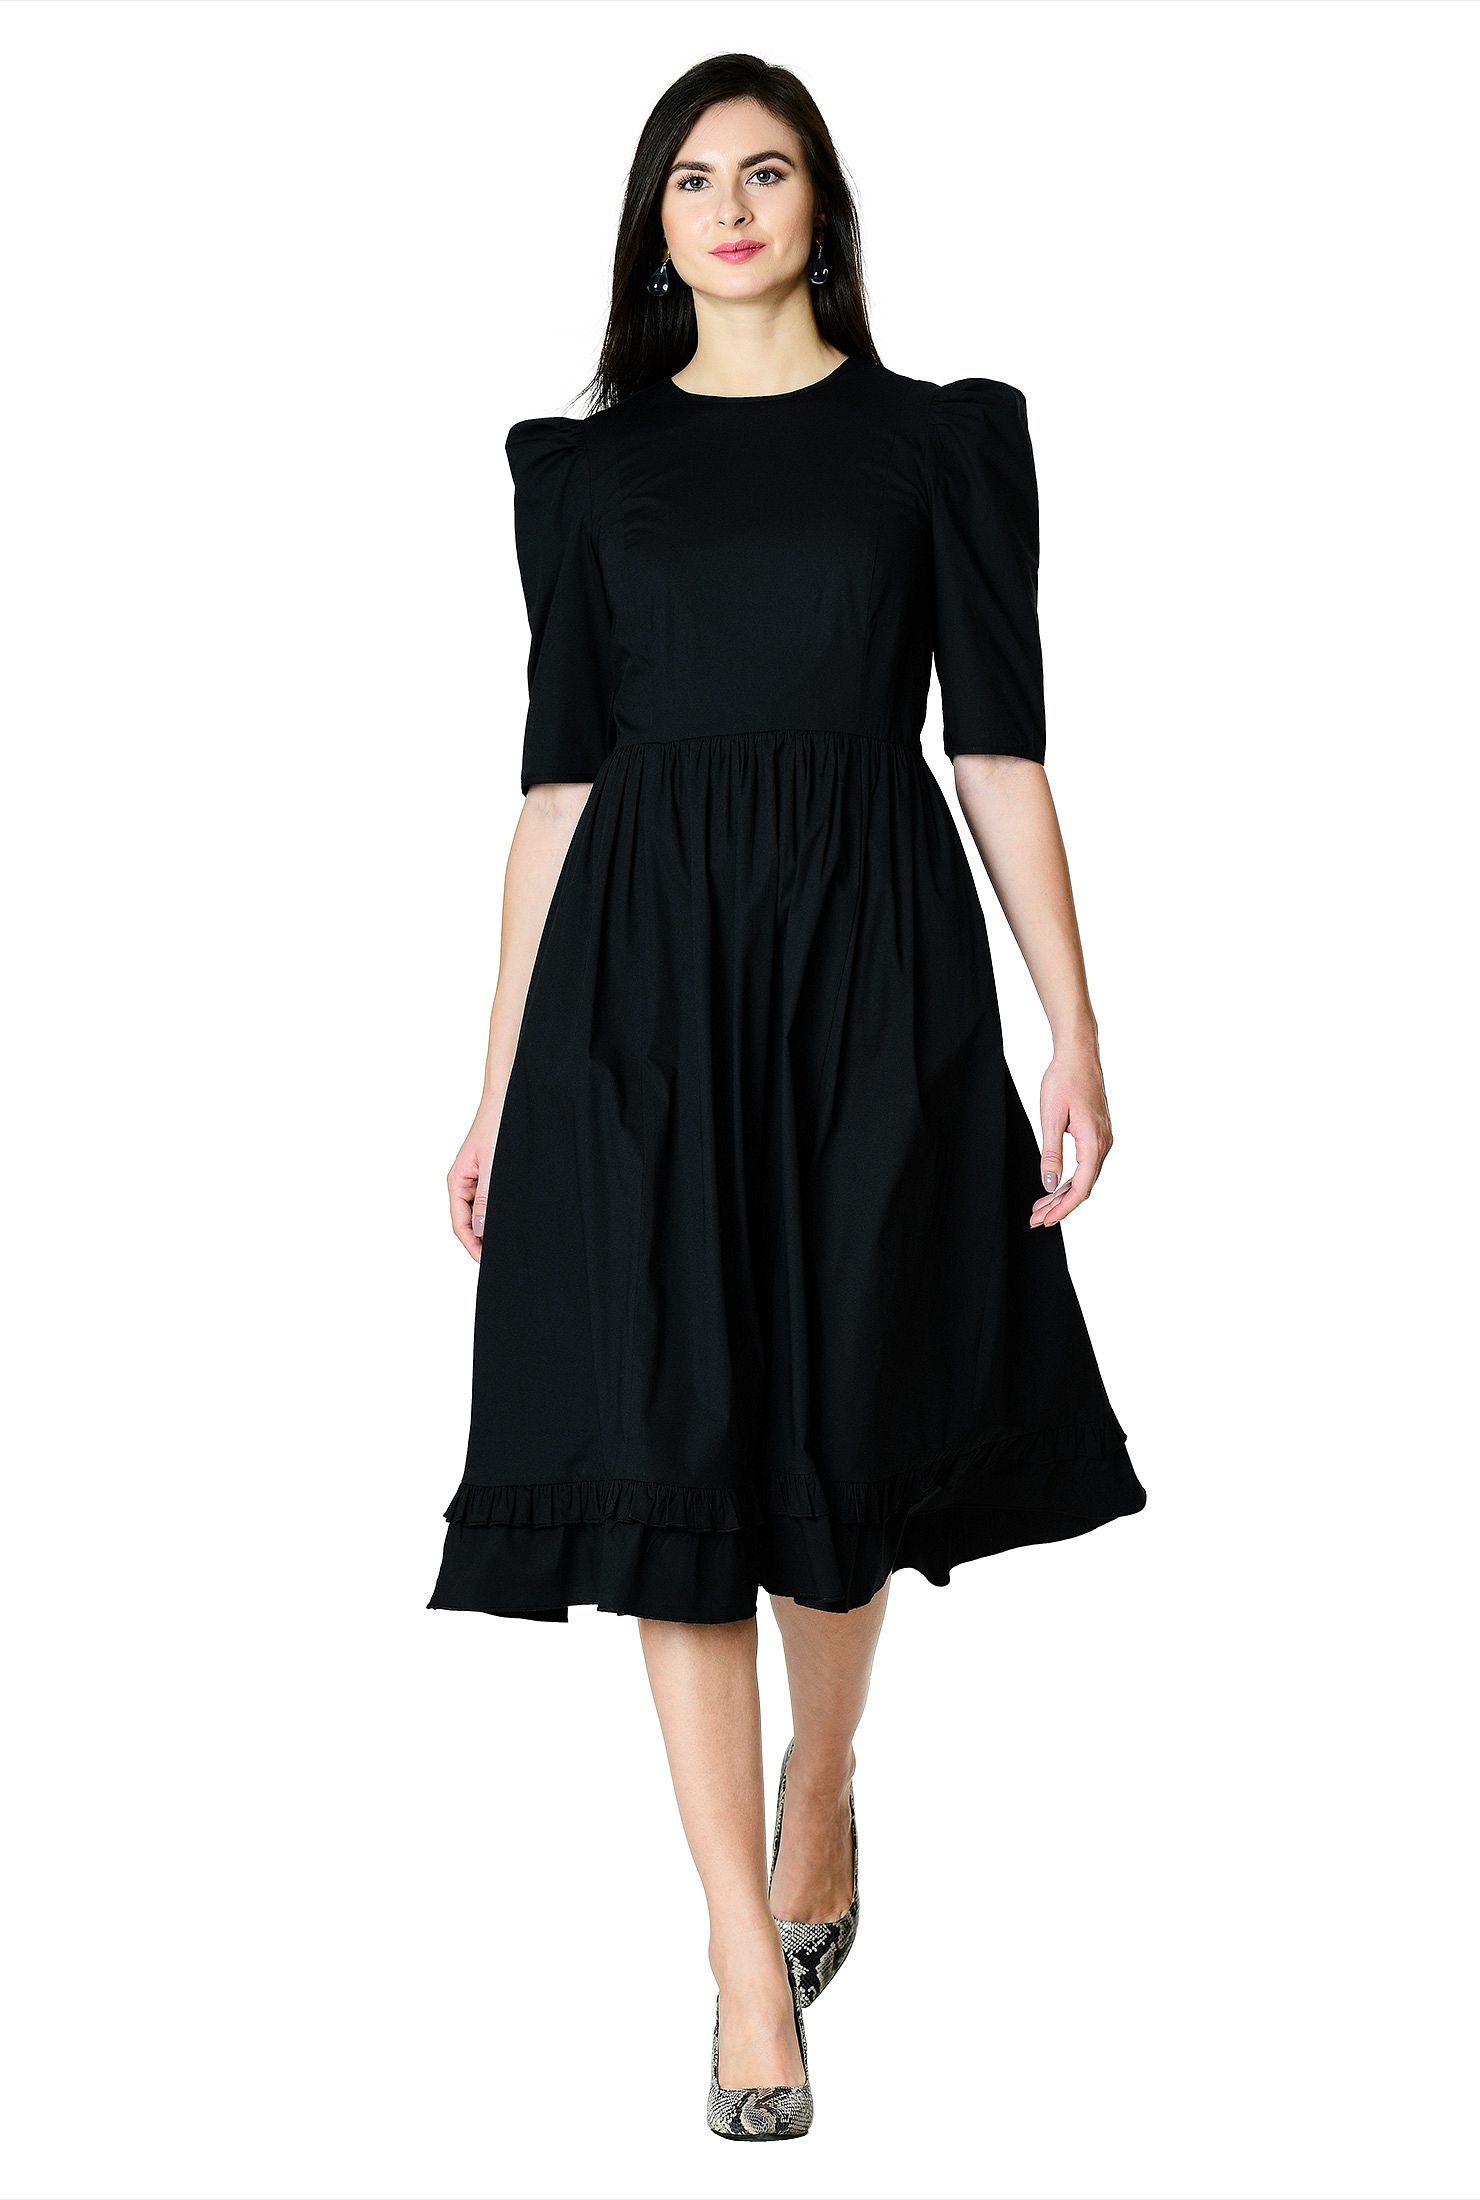 Customized cotton poplin dress – A Thrifty Mom